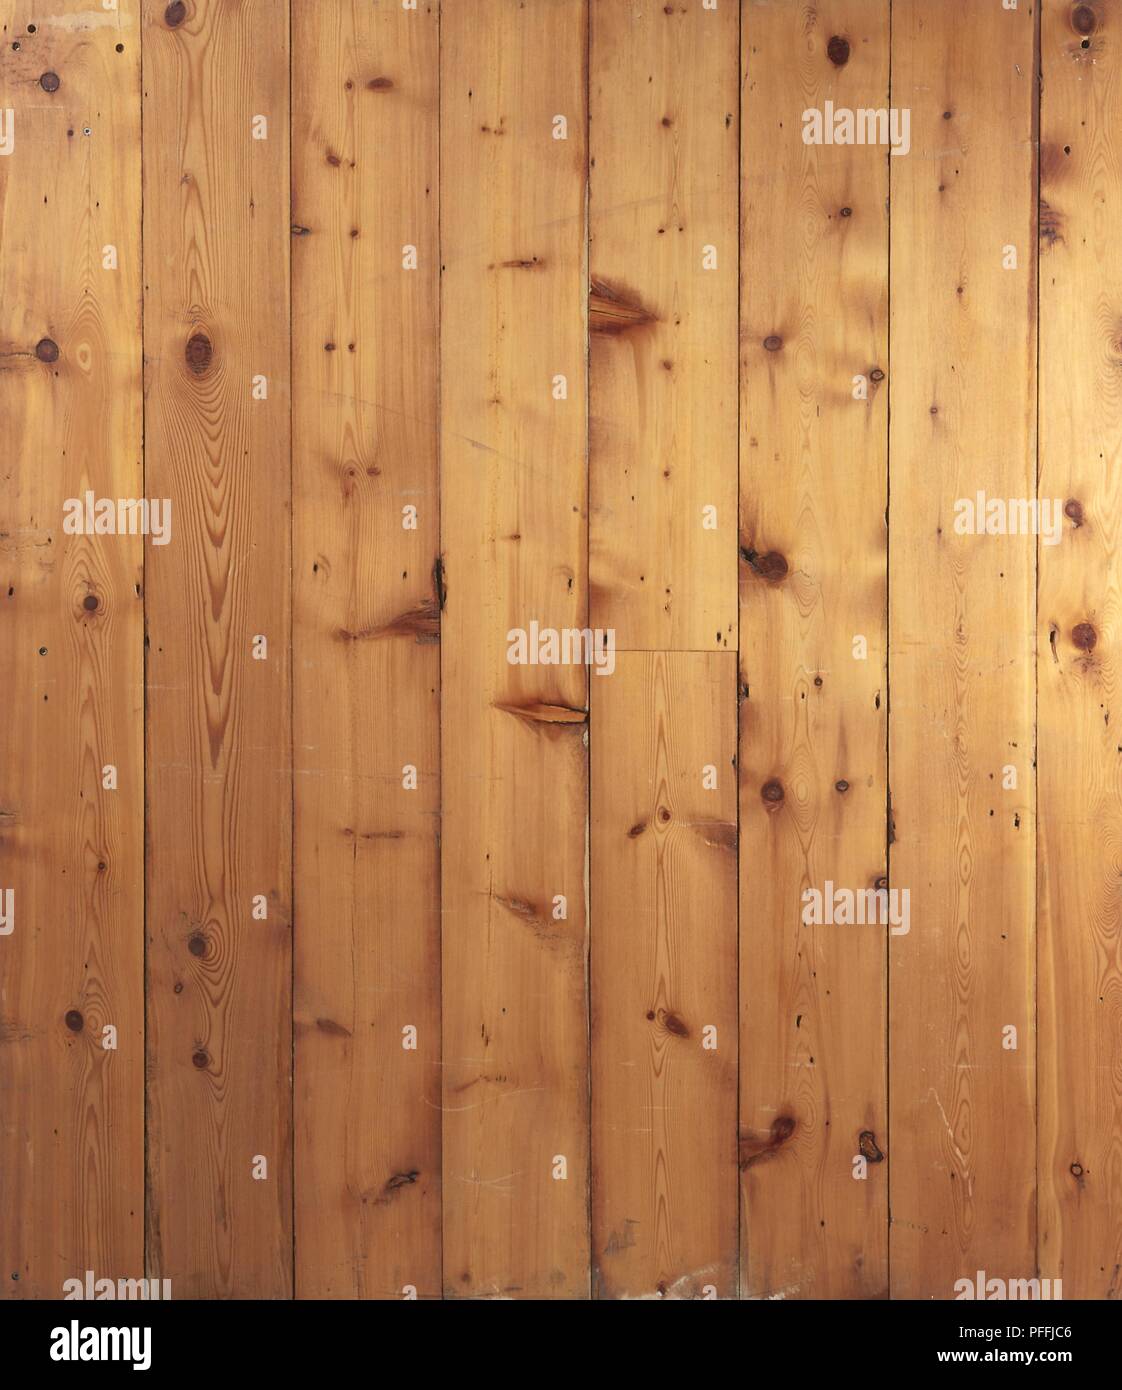 Waxed pine floorboards Stock Photo